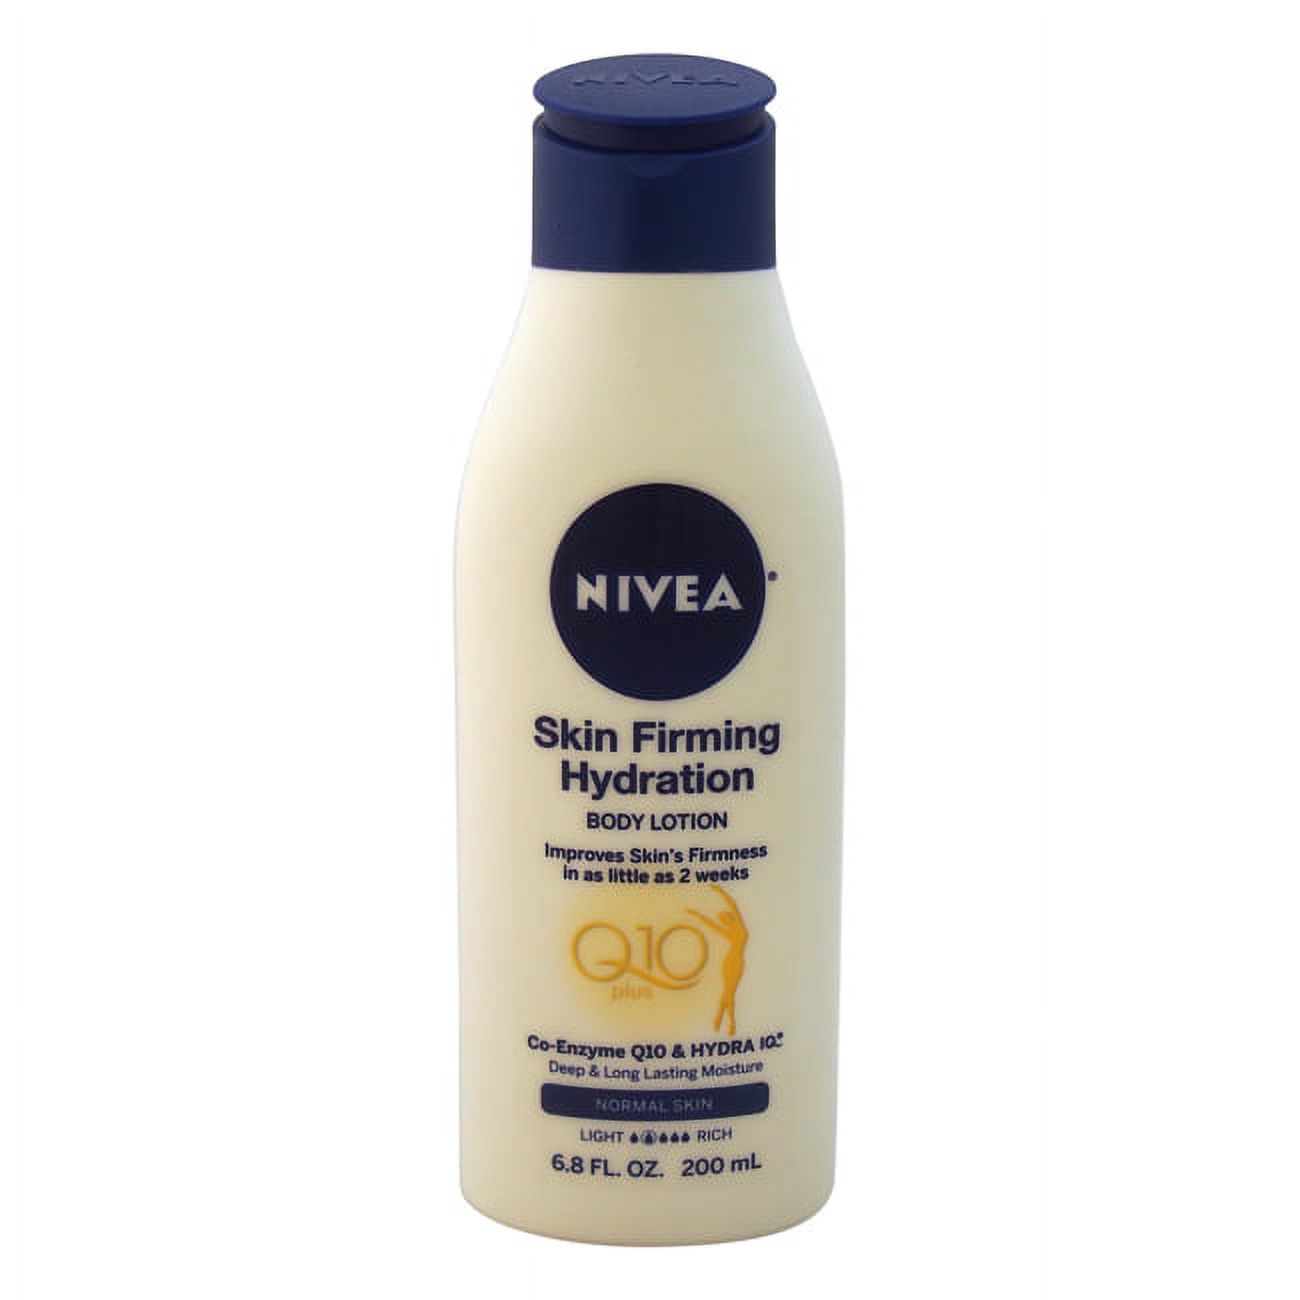 NIVEA Skin Firming Hydration Body Lotion, 6.8 oz - image 1 of 5